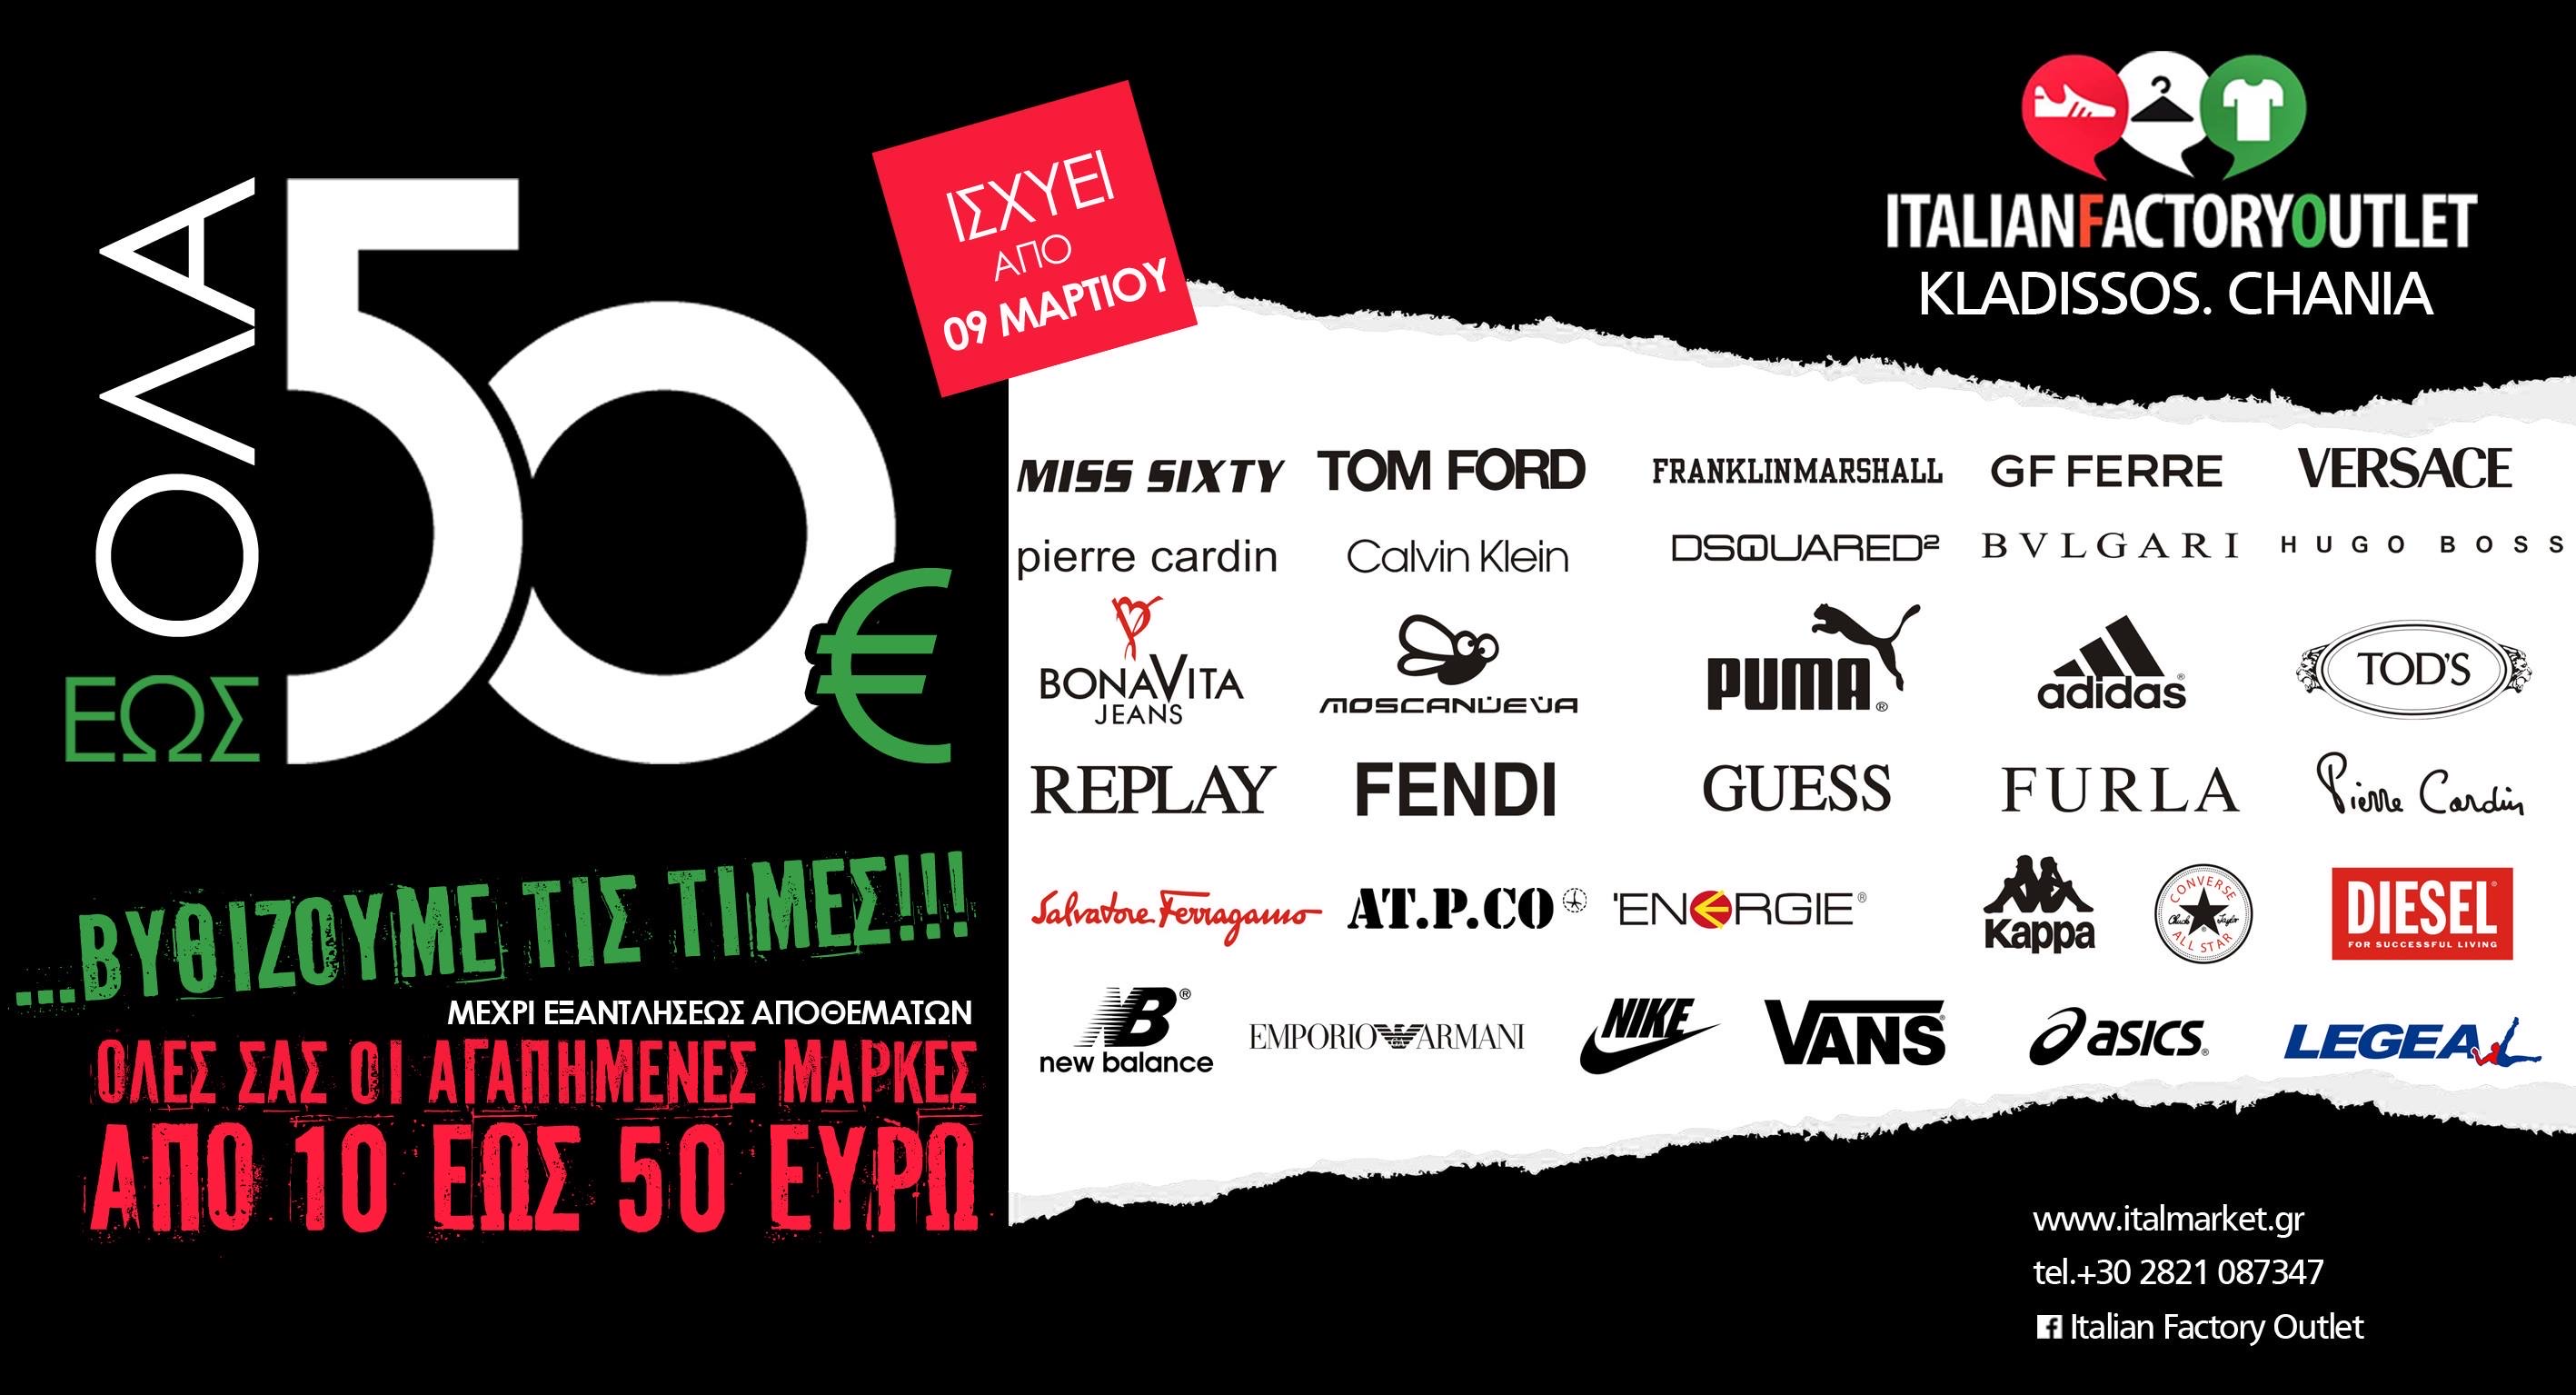 Italian Factory Outlet: Τα Πάντα από 10 έως 50 ευρώ!